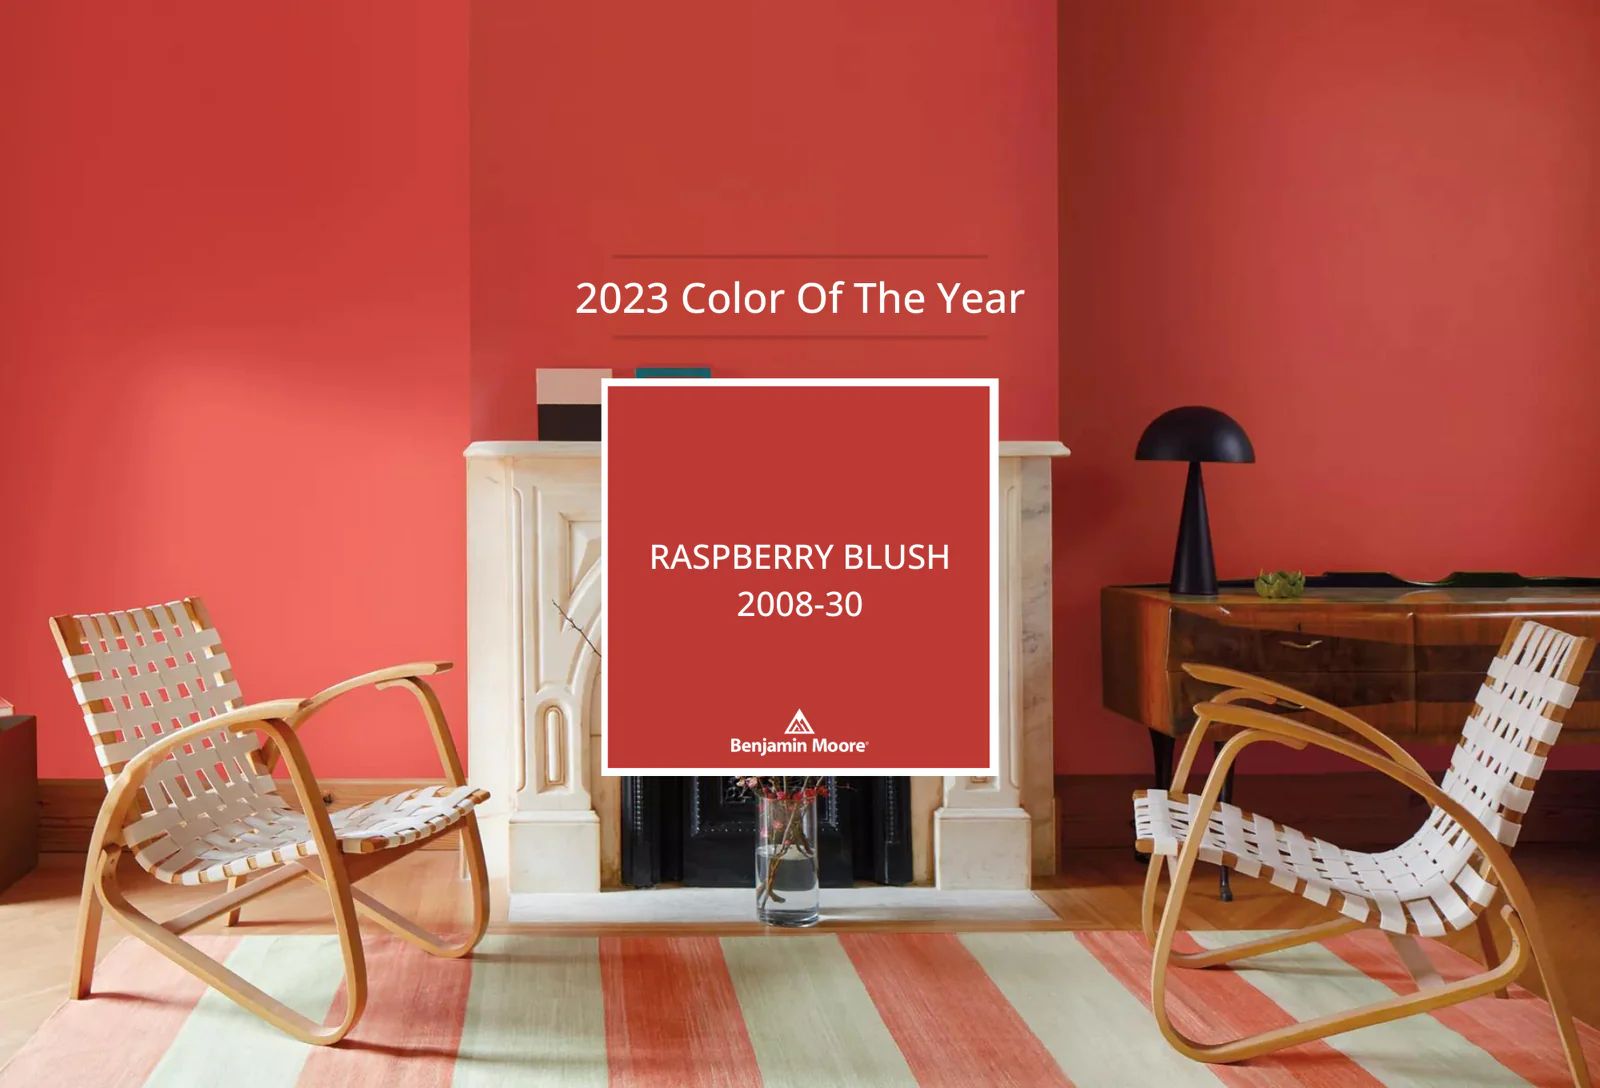 1. Raspberry Blush 2008-30